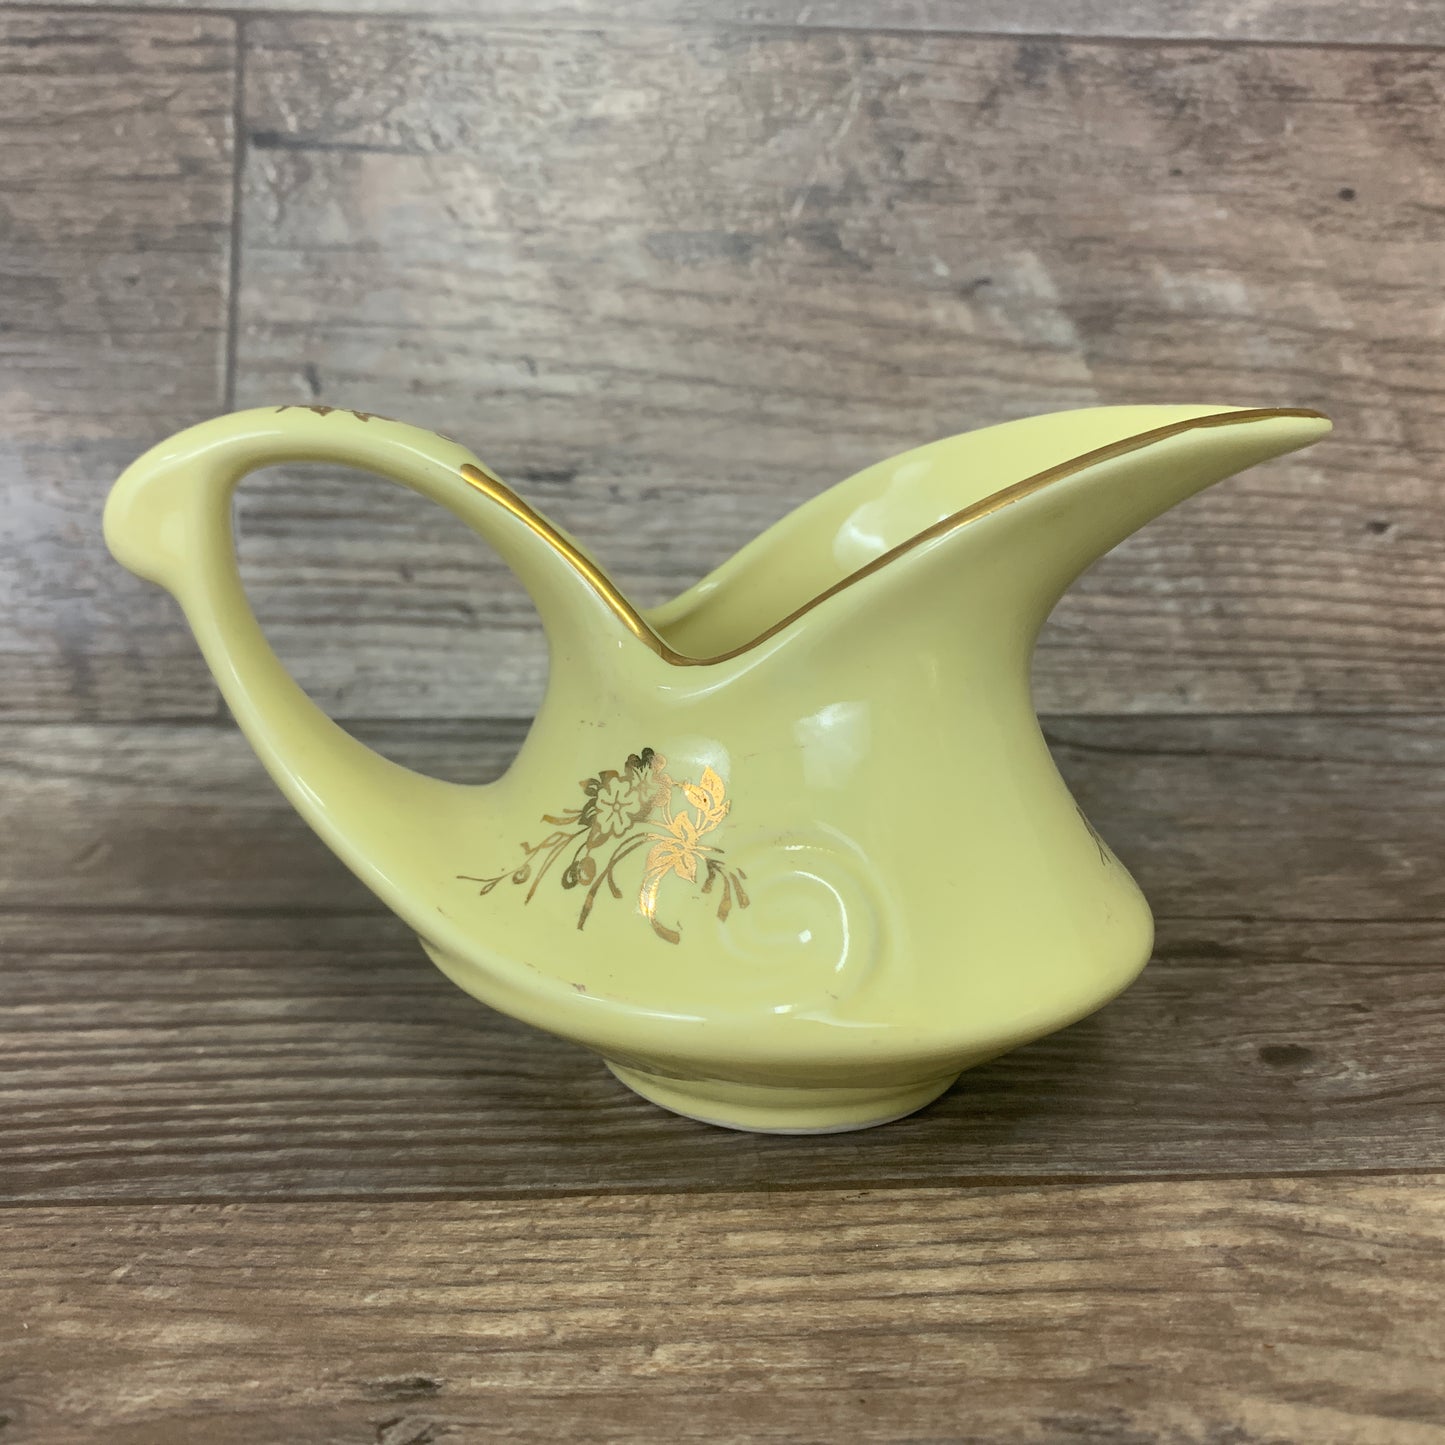 Yellow Tea Set, Vintage Teapot, Creamer, and Sugar Bowl